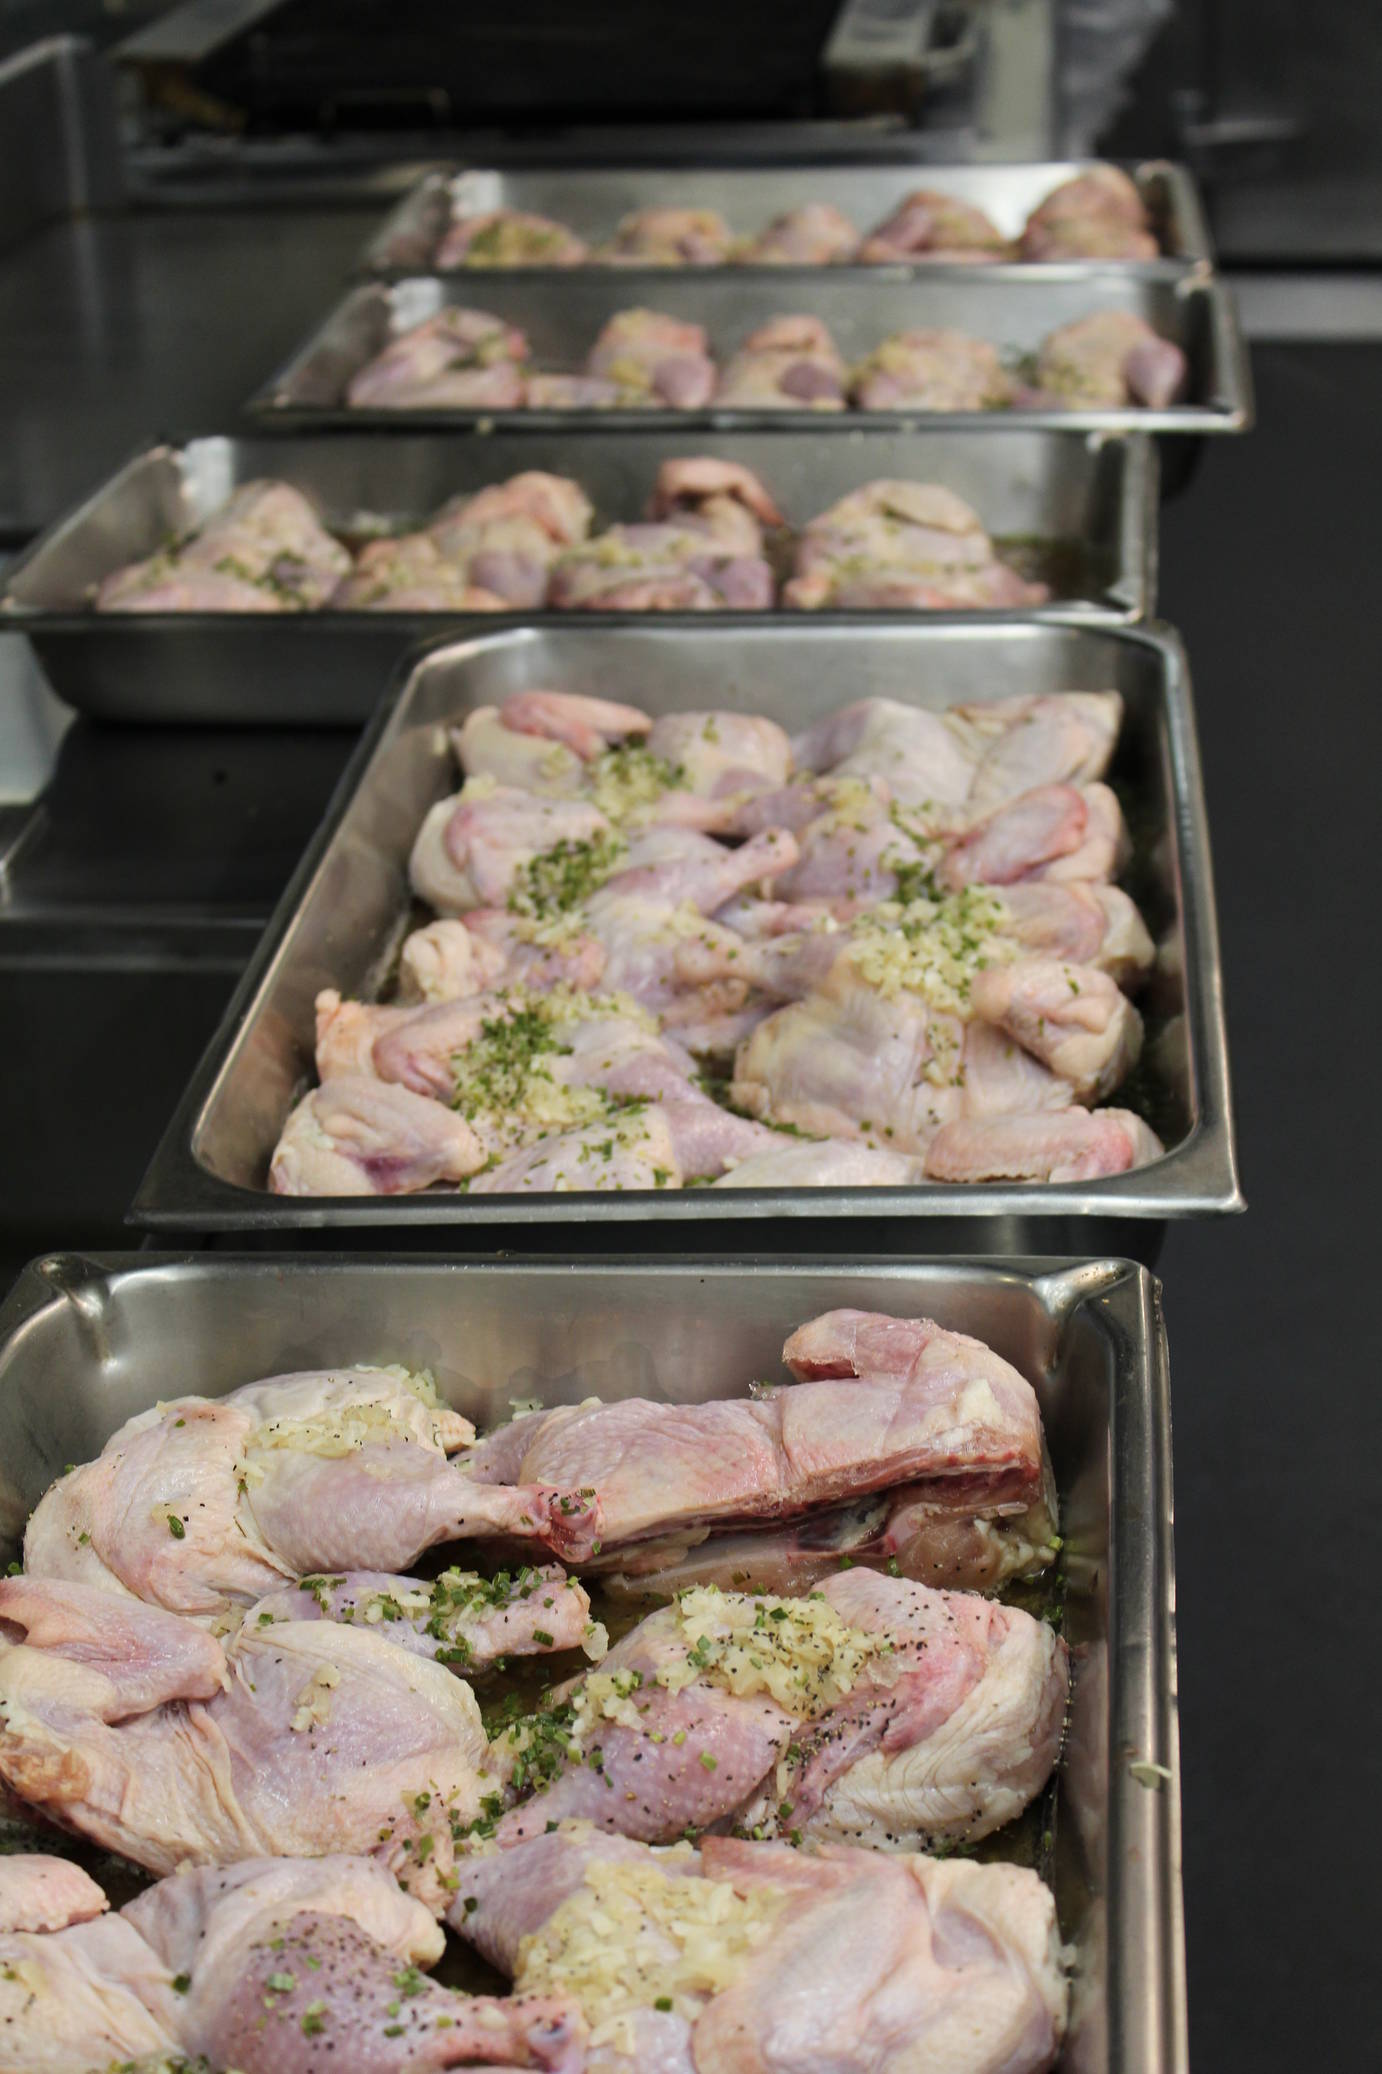 Behind the scenes - preparing the chicken halves (Photo: Stephanie Olcott)